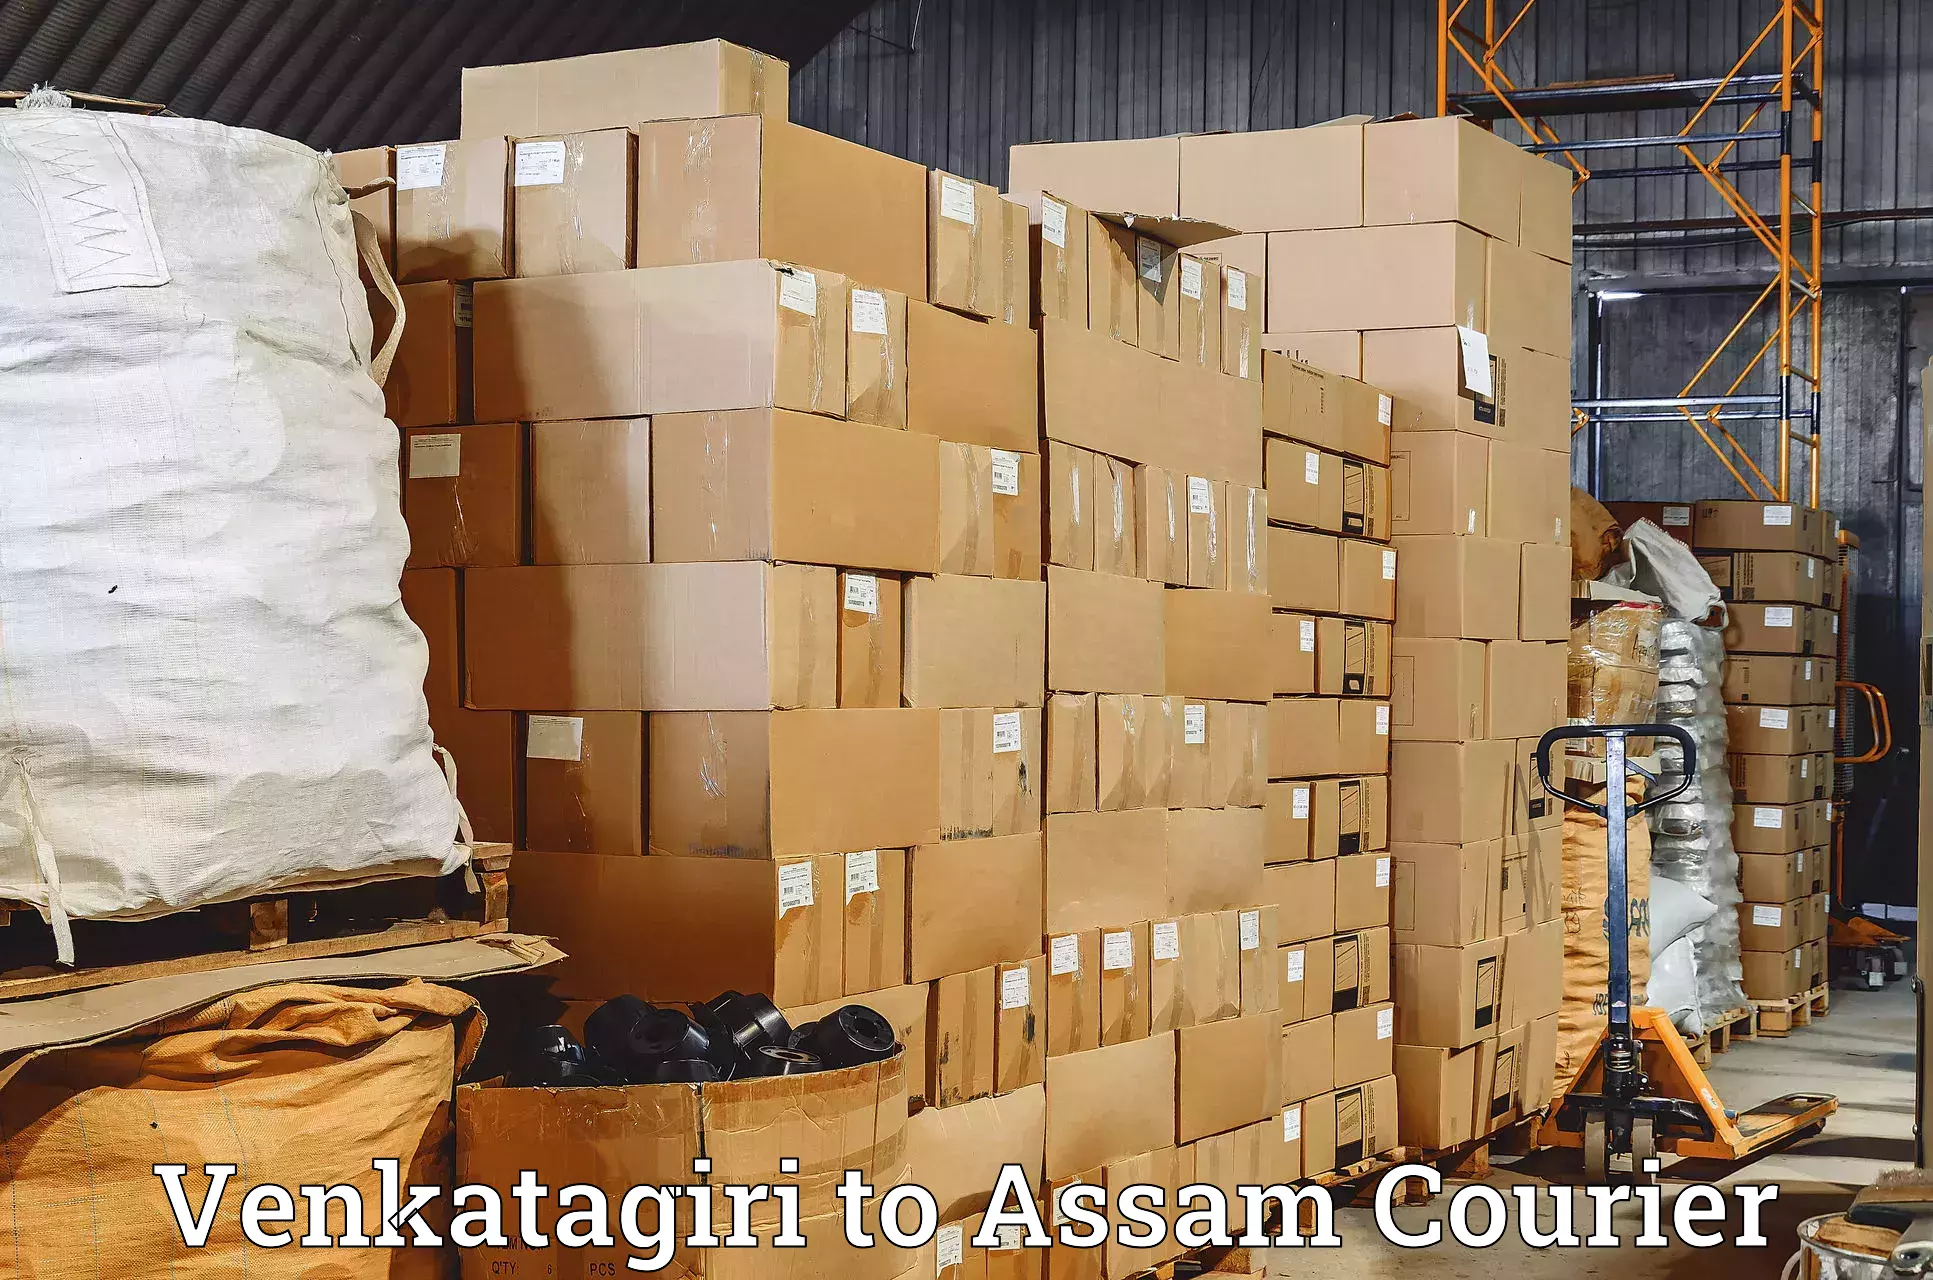 Same-day delivery options Venkatagiri to Lala Assam